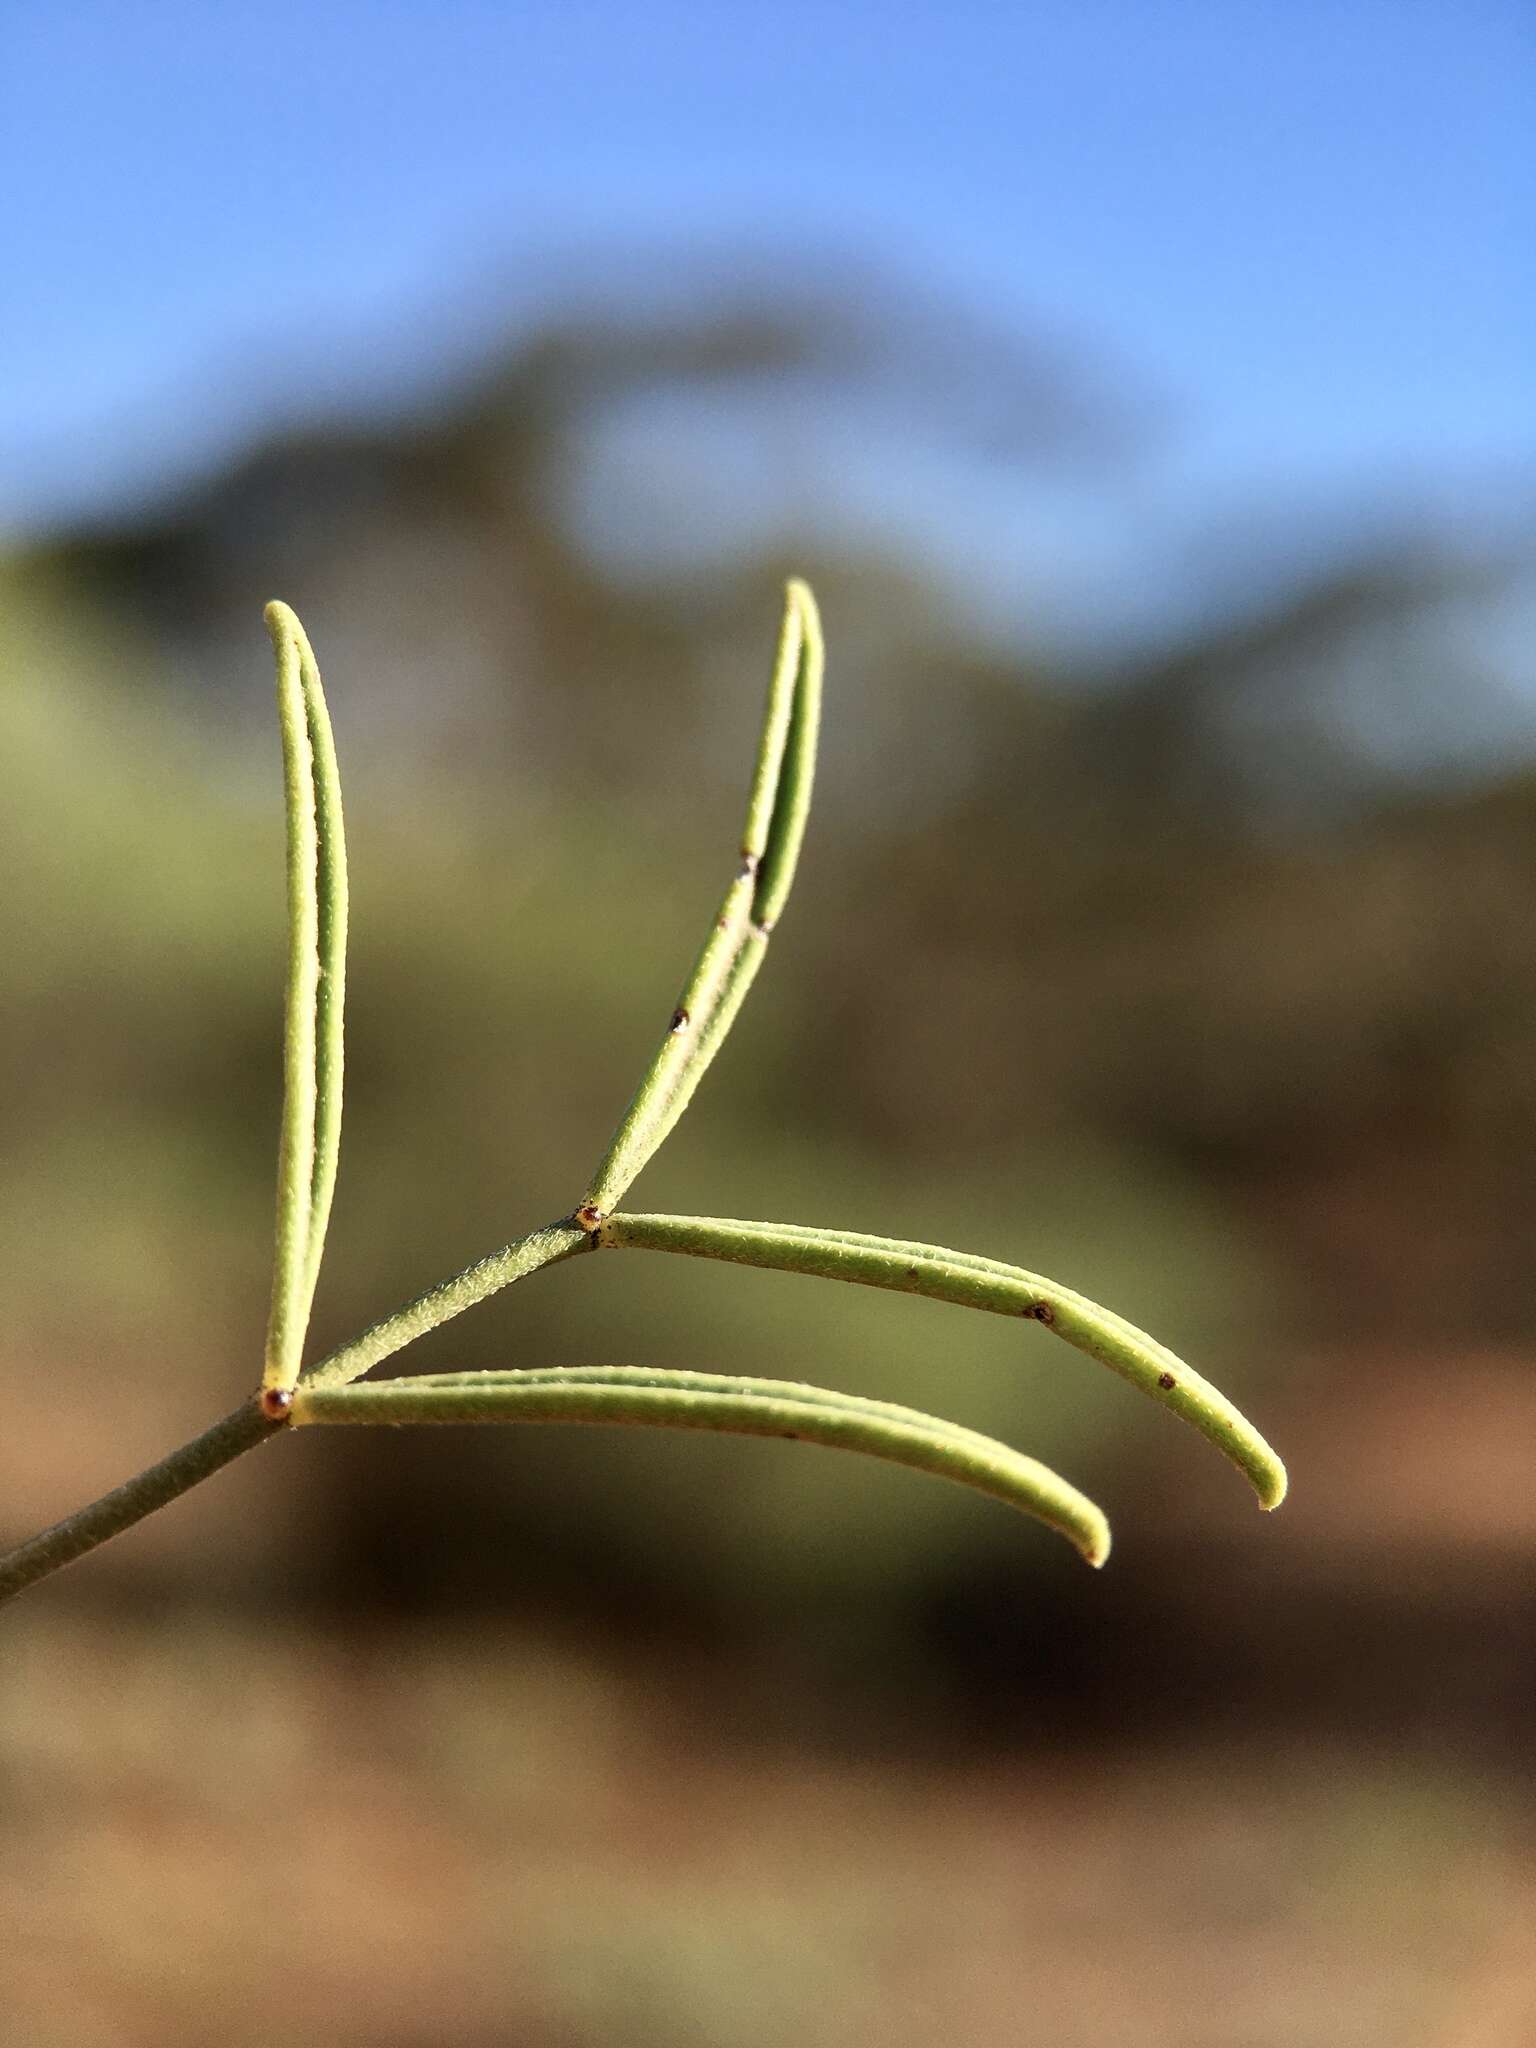 Image of Senna artemisioides subsp. zygophylla